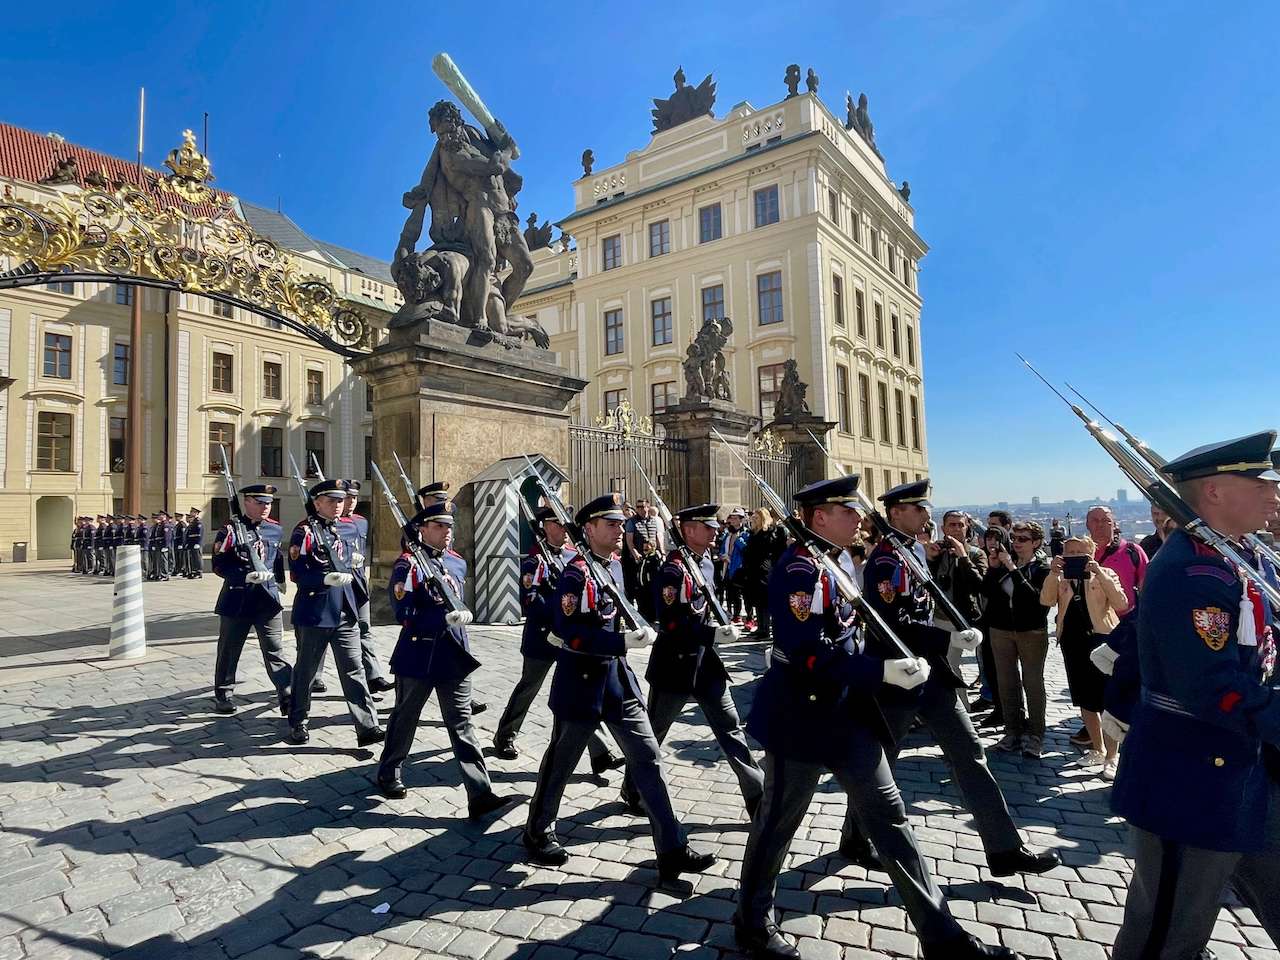 Czech Republic, Prague - The ceremonial Changing of the Guard